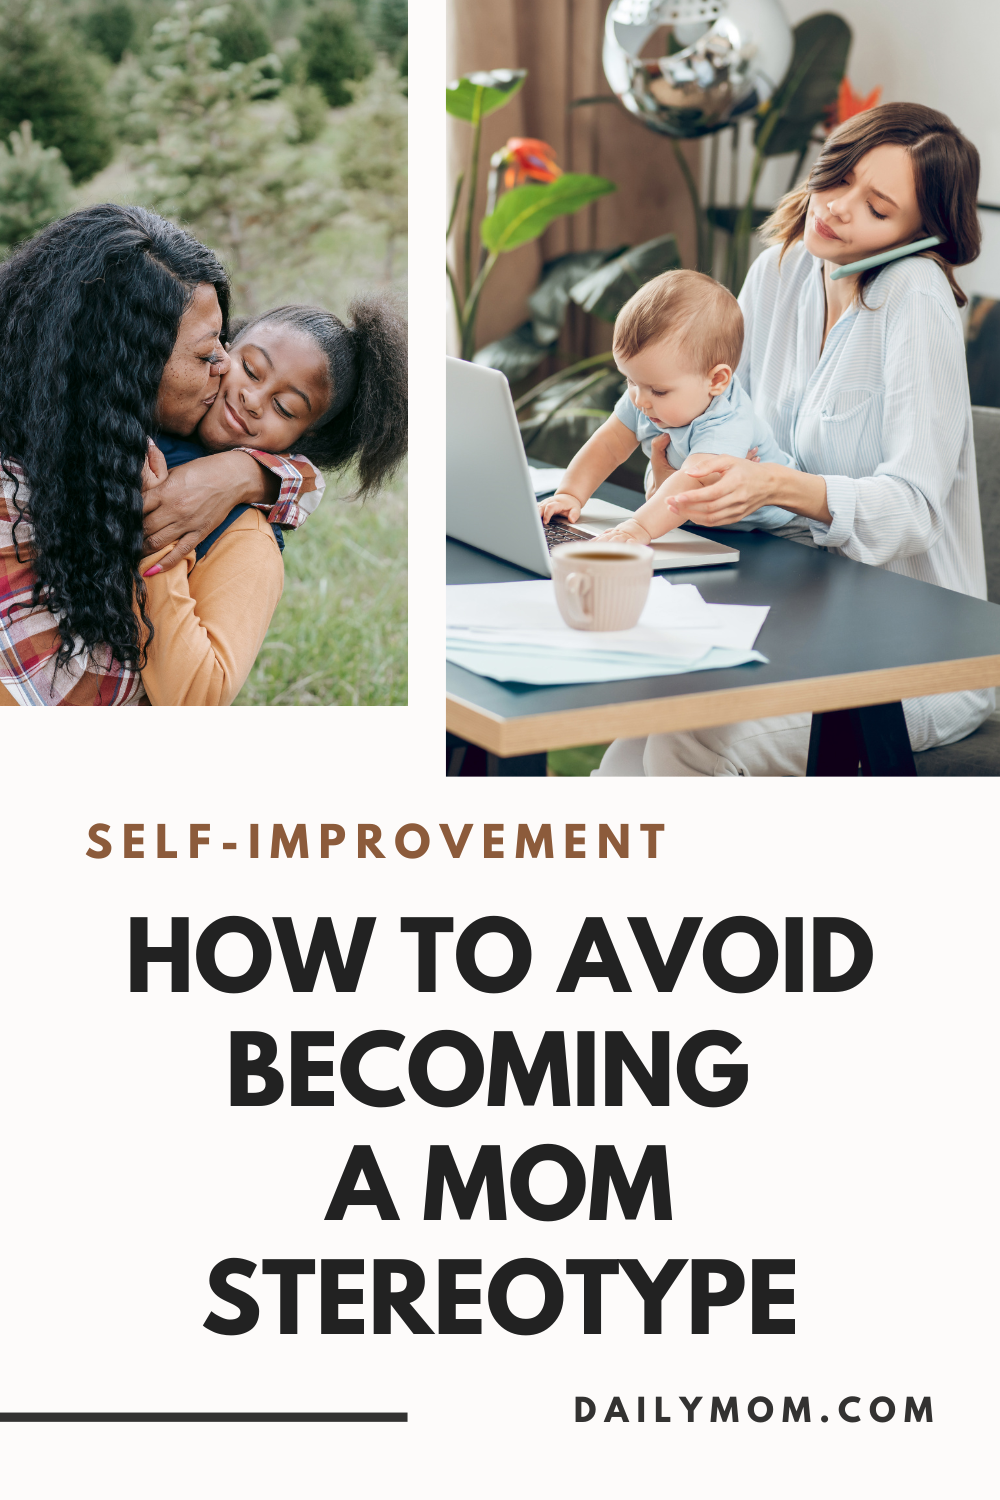 Daily Mom Parent Portal Mom Stereotypes